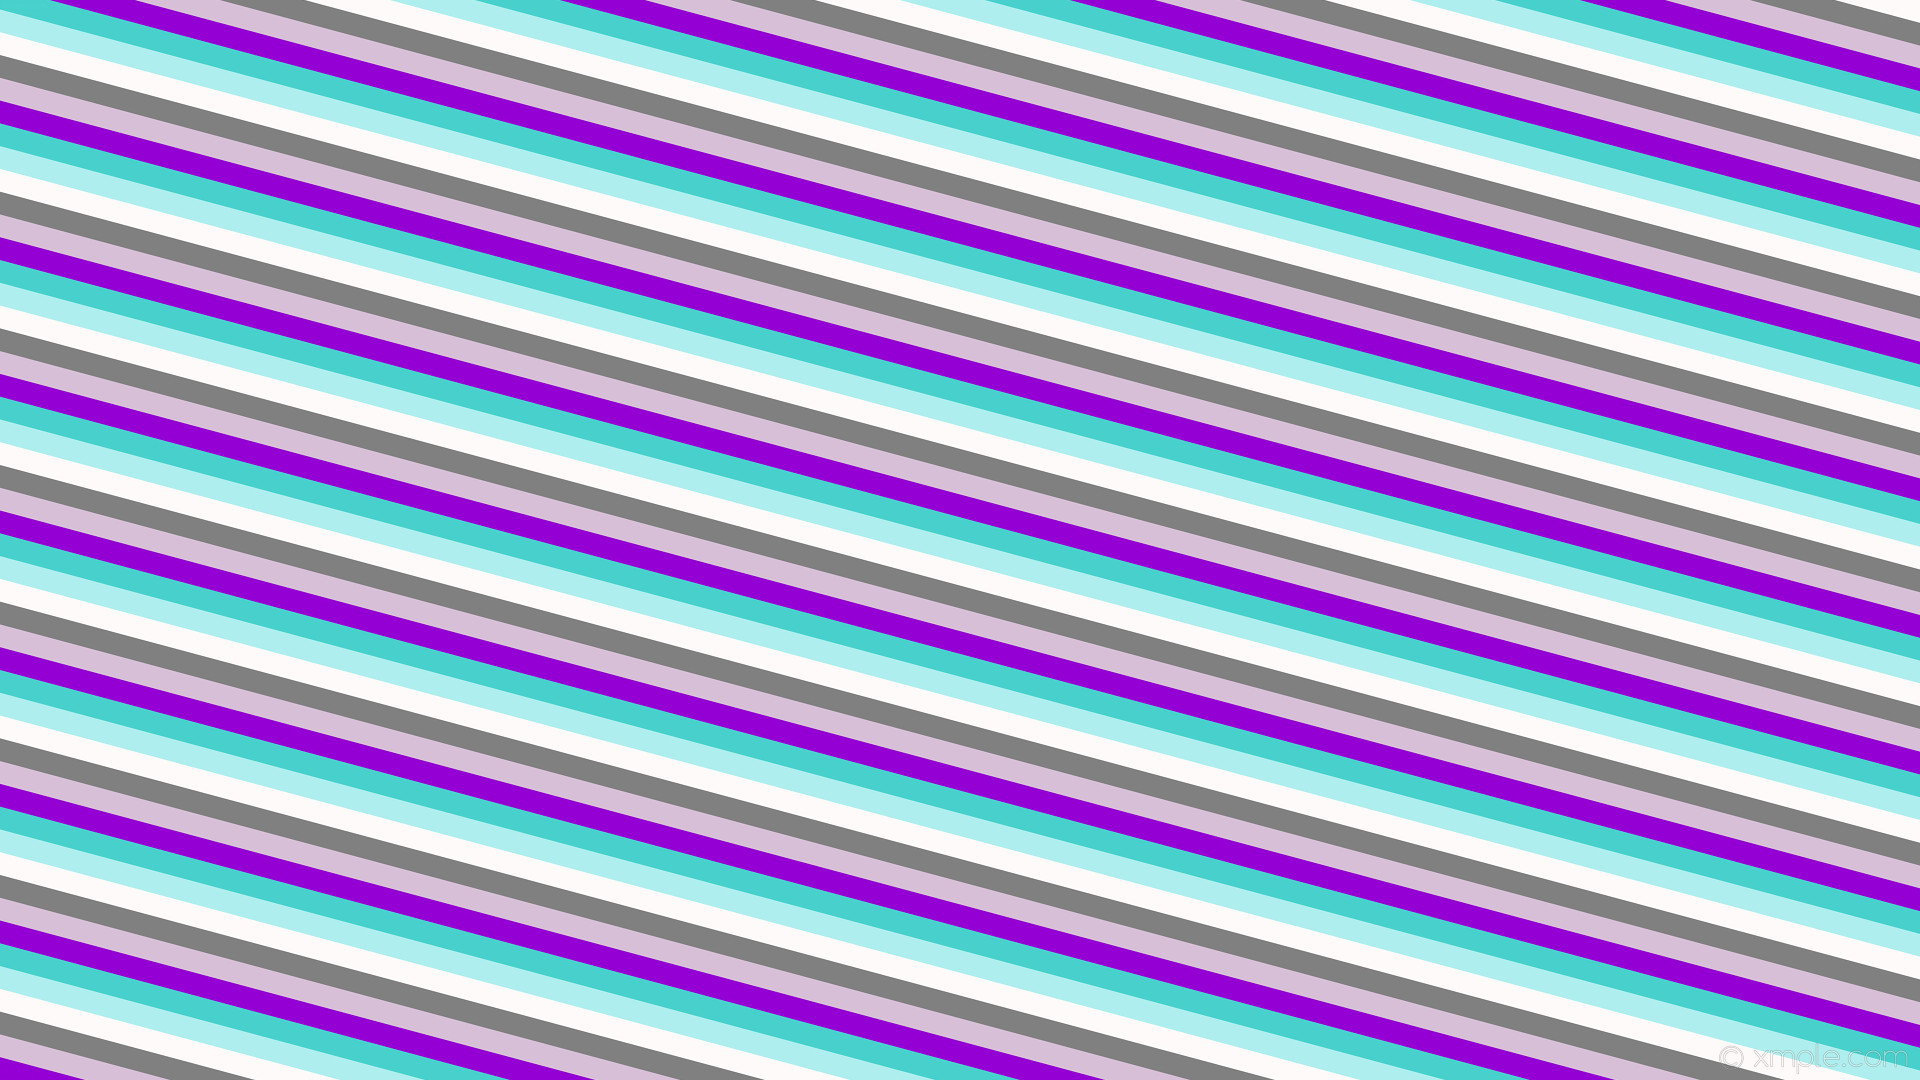 1920x1080 wallpaper streaks blue purple stripes white lines grey pale turquoise snow  gray thistle dark violet medium